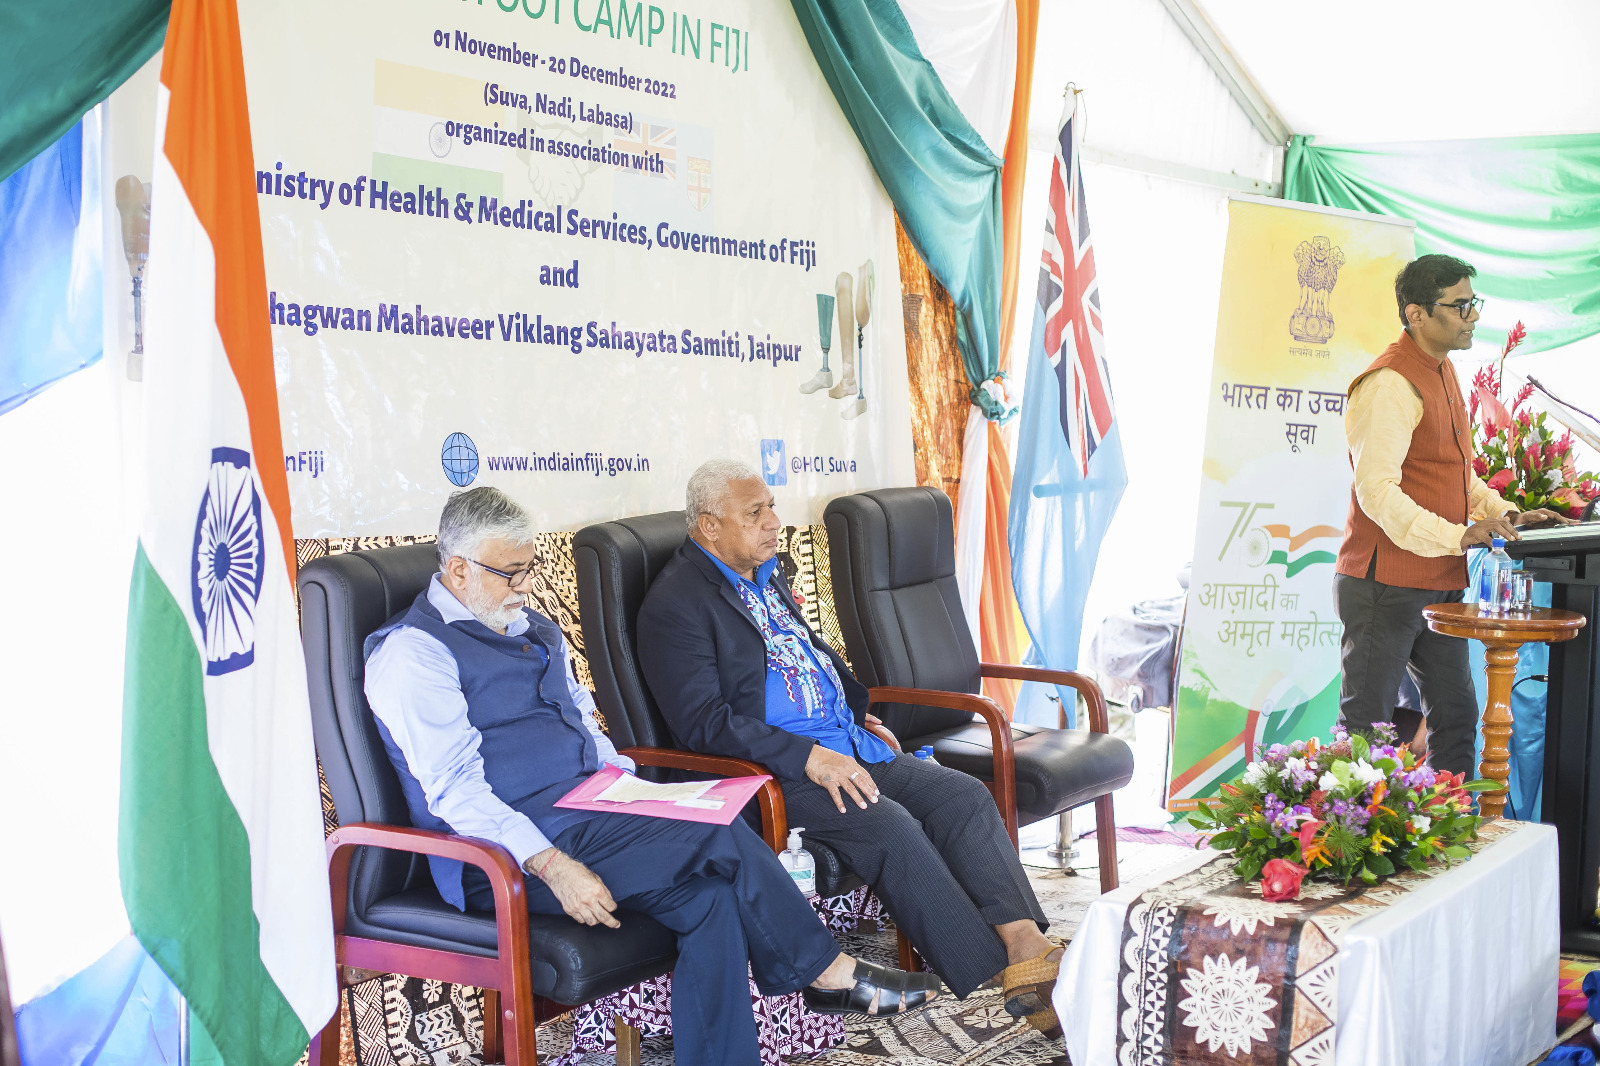  Inauguration of Jaipur Foot Camp in Fiji - 03.11.2022.